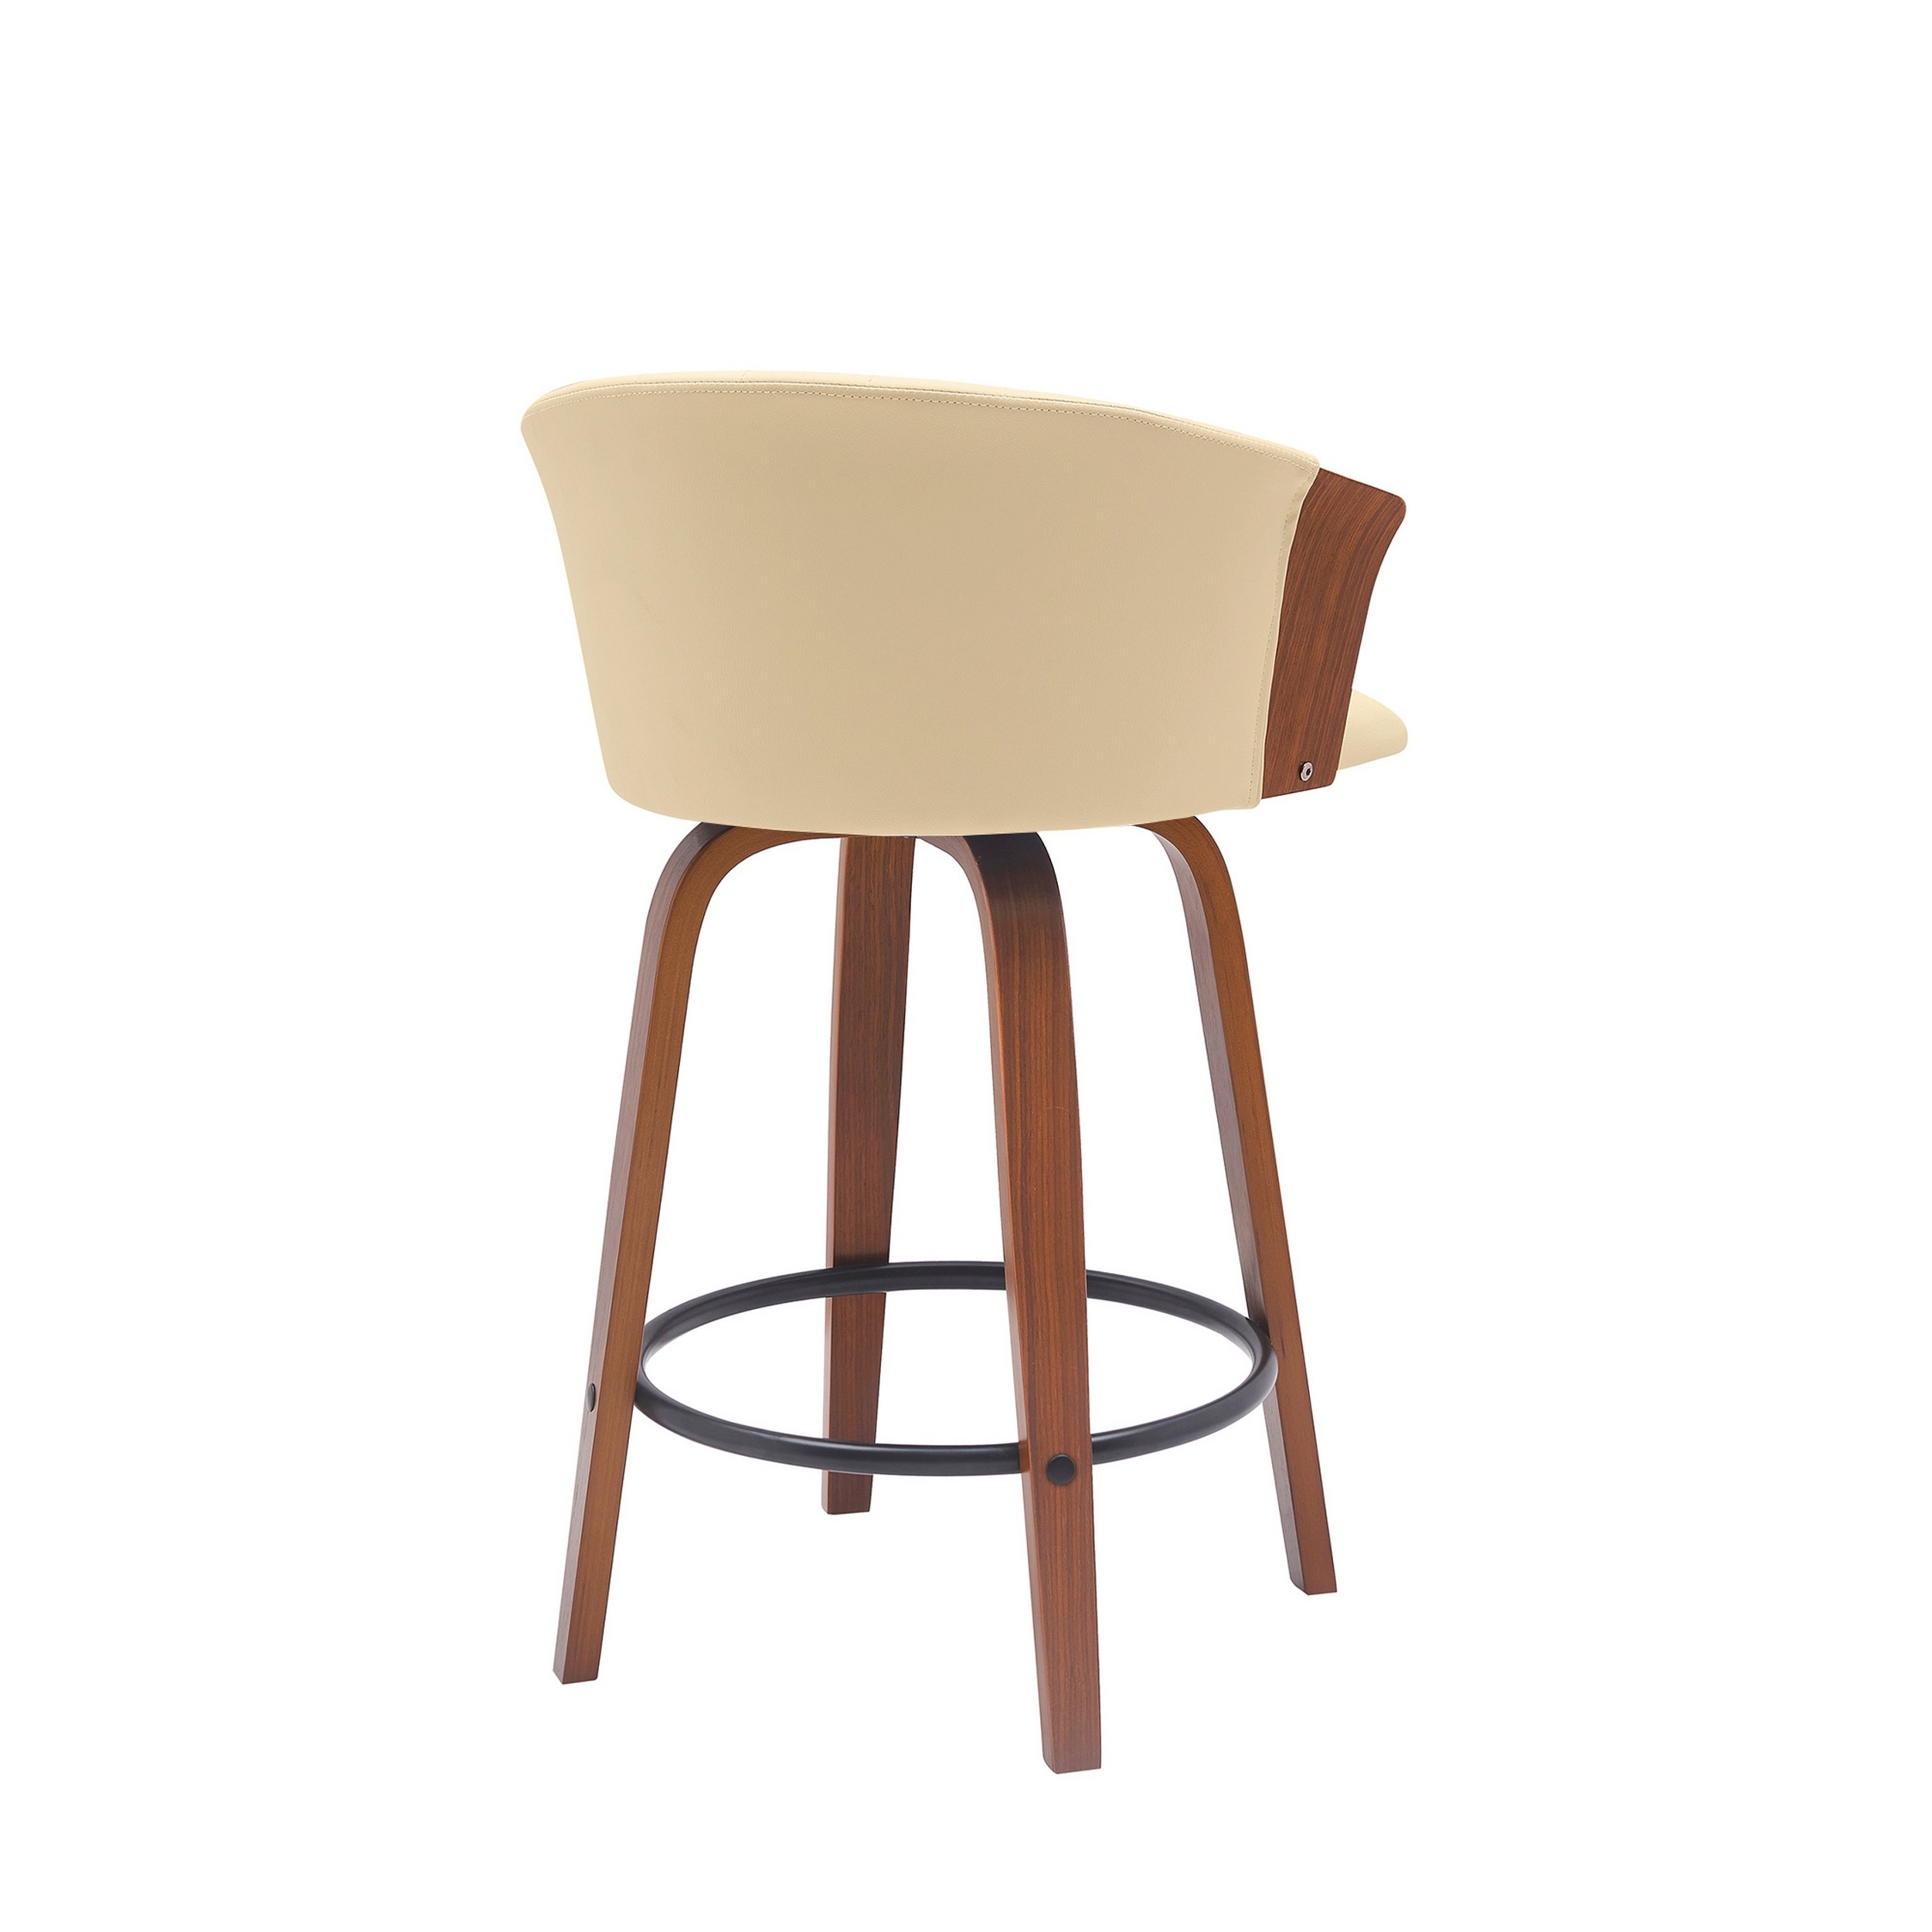 Oja 26 Inch Swivel Counter Stool Chair, Cream Vegan Leather, Walnut Brown - Saltoro Sherpi